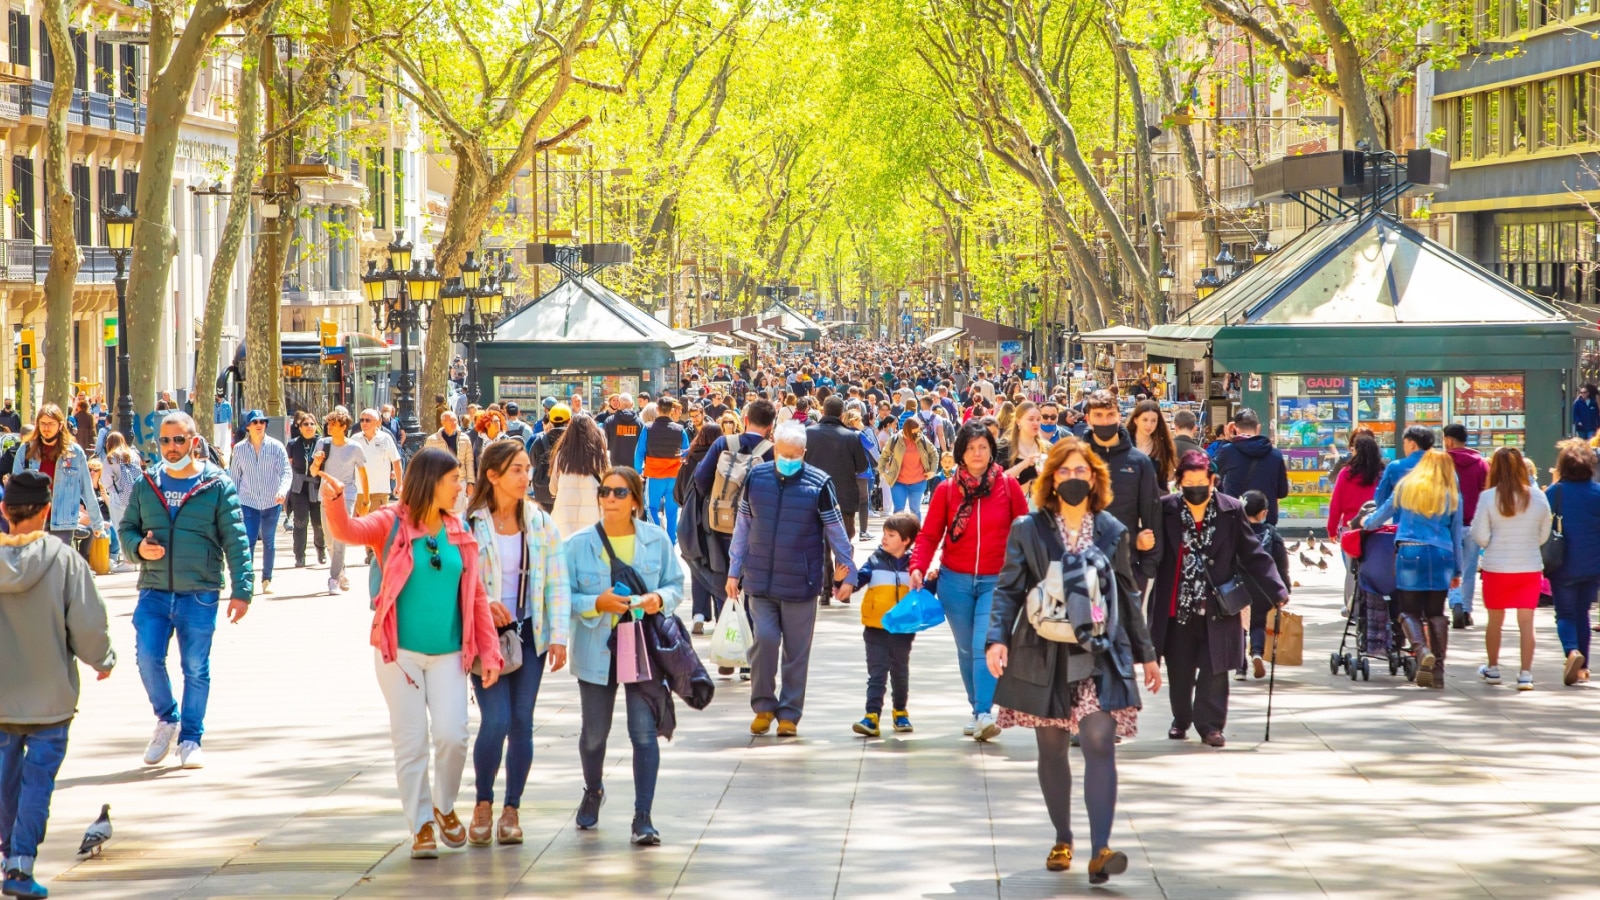 Barcelona, Spain - 11 April, 2022: La Rambla busy street photo with many walking people. La Rambla is the most popular pedestrian street in Barcelona city.